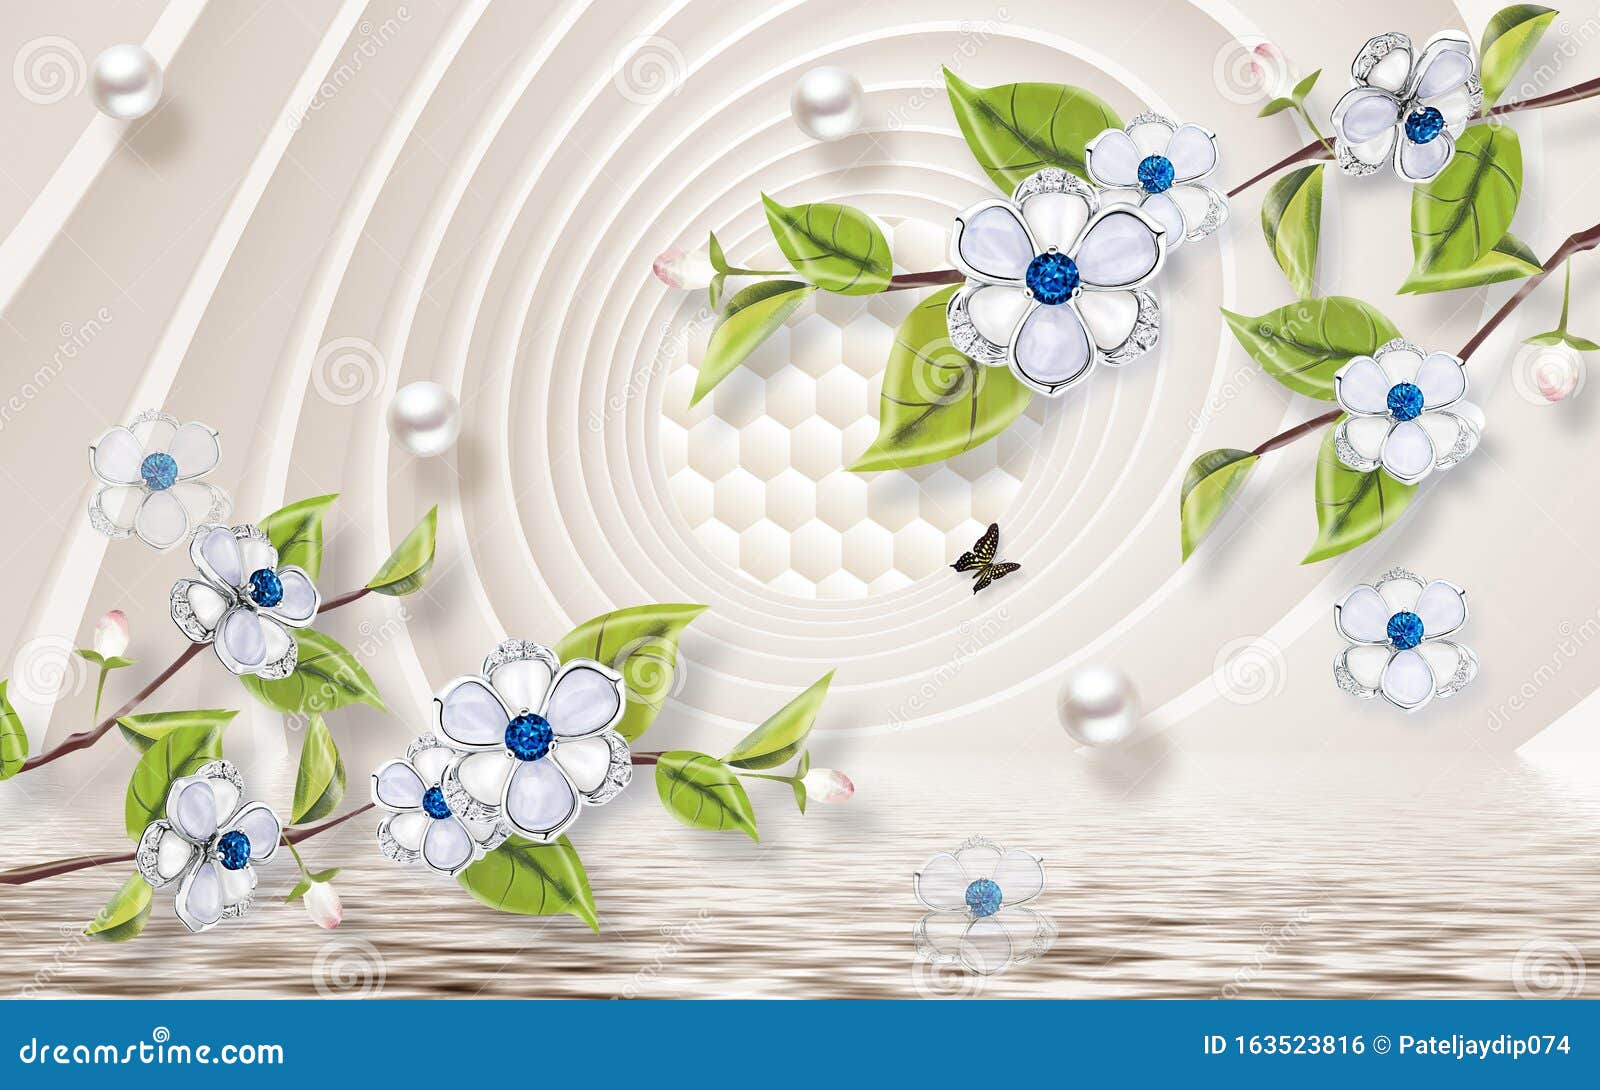 3d Flower Design Wallpaper Background, Stock Illustration - Illustration of  abstract, green: 163523816